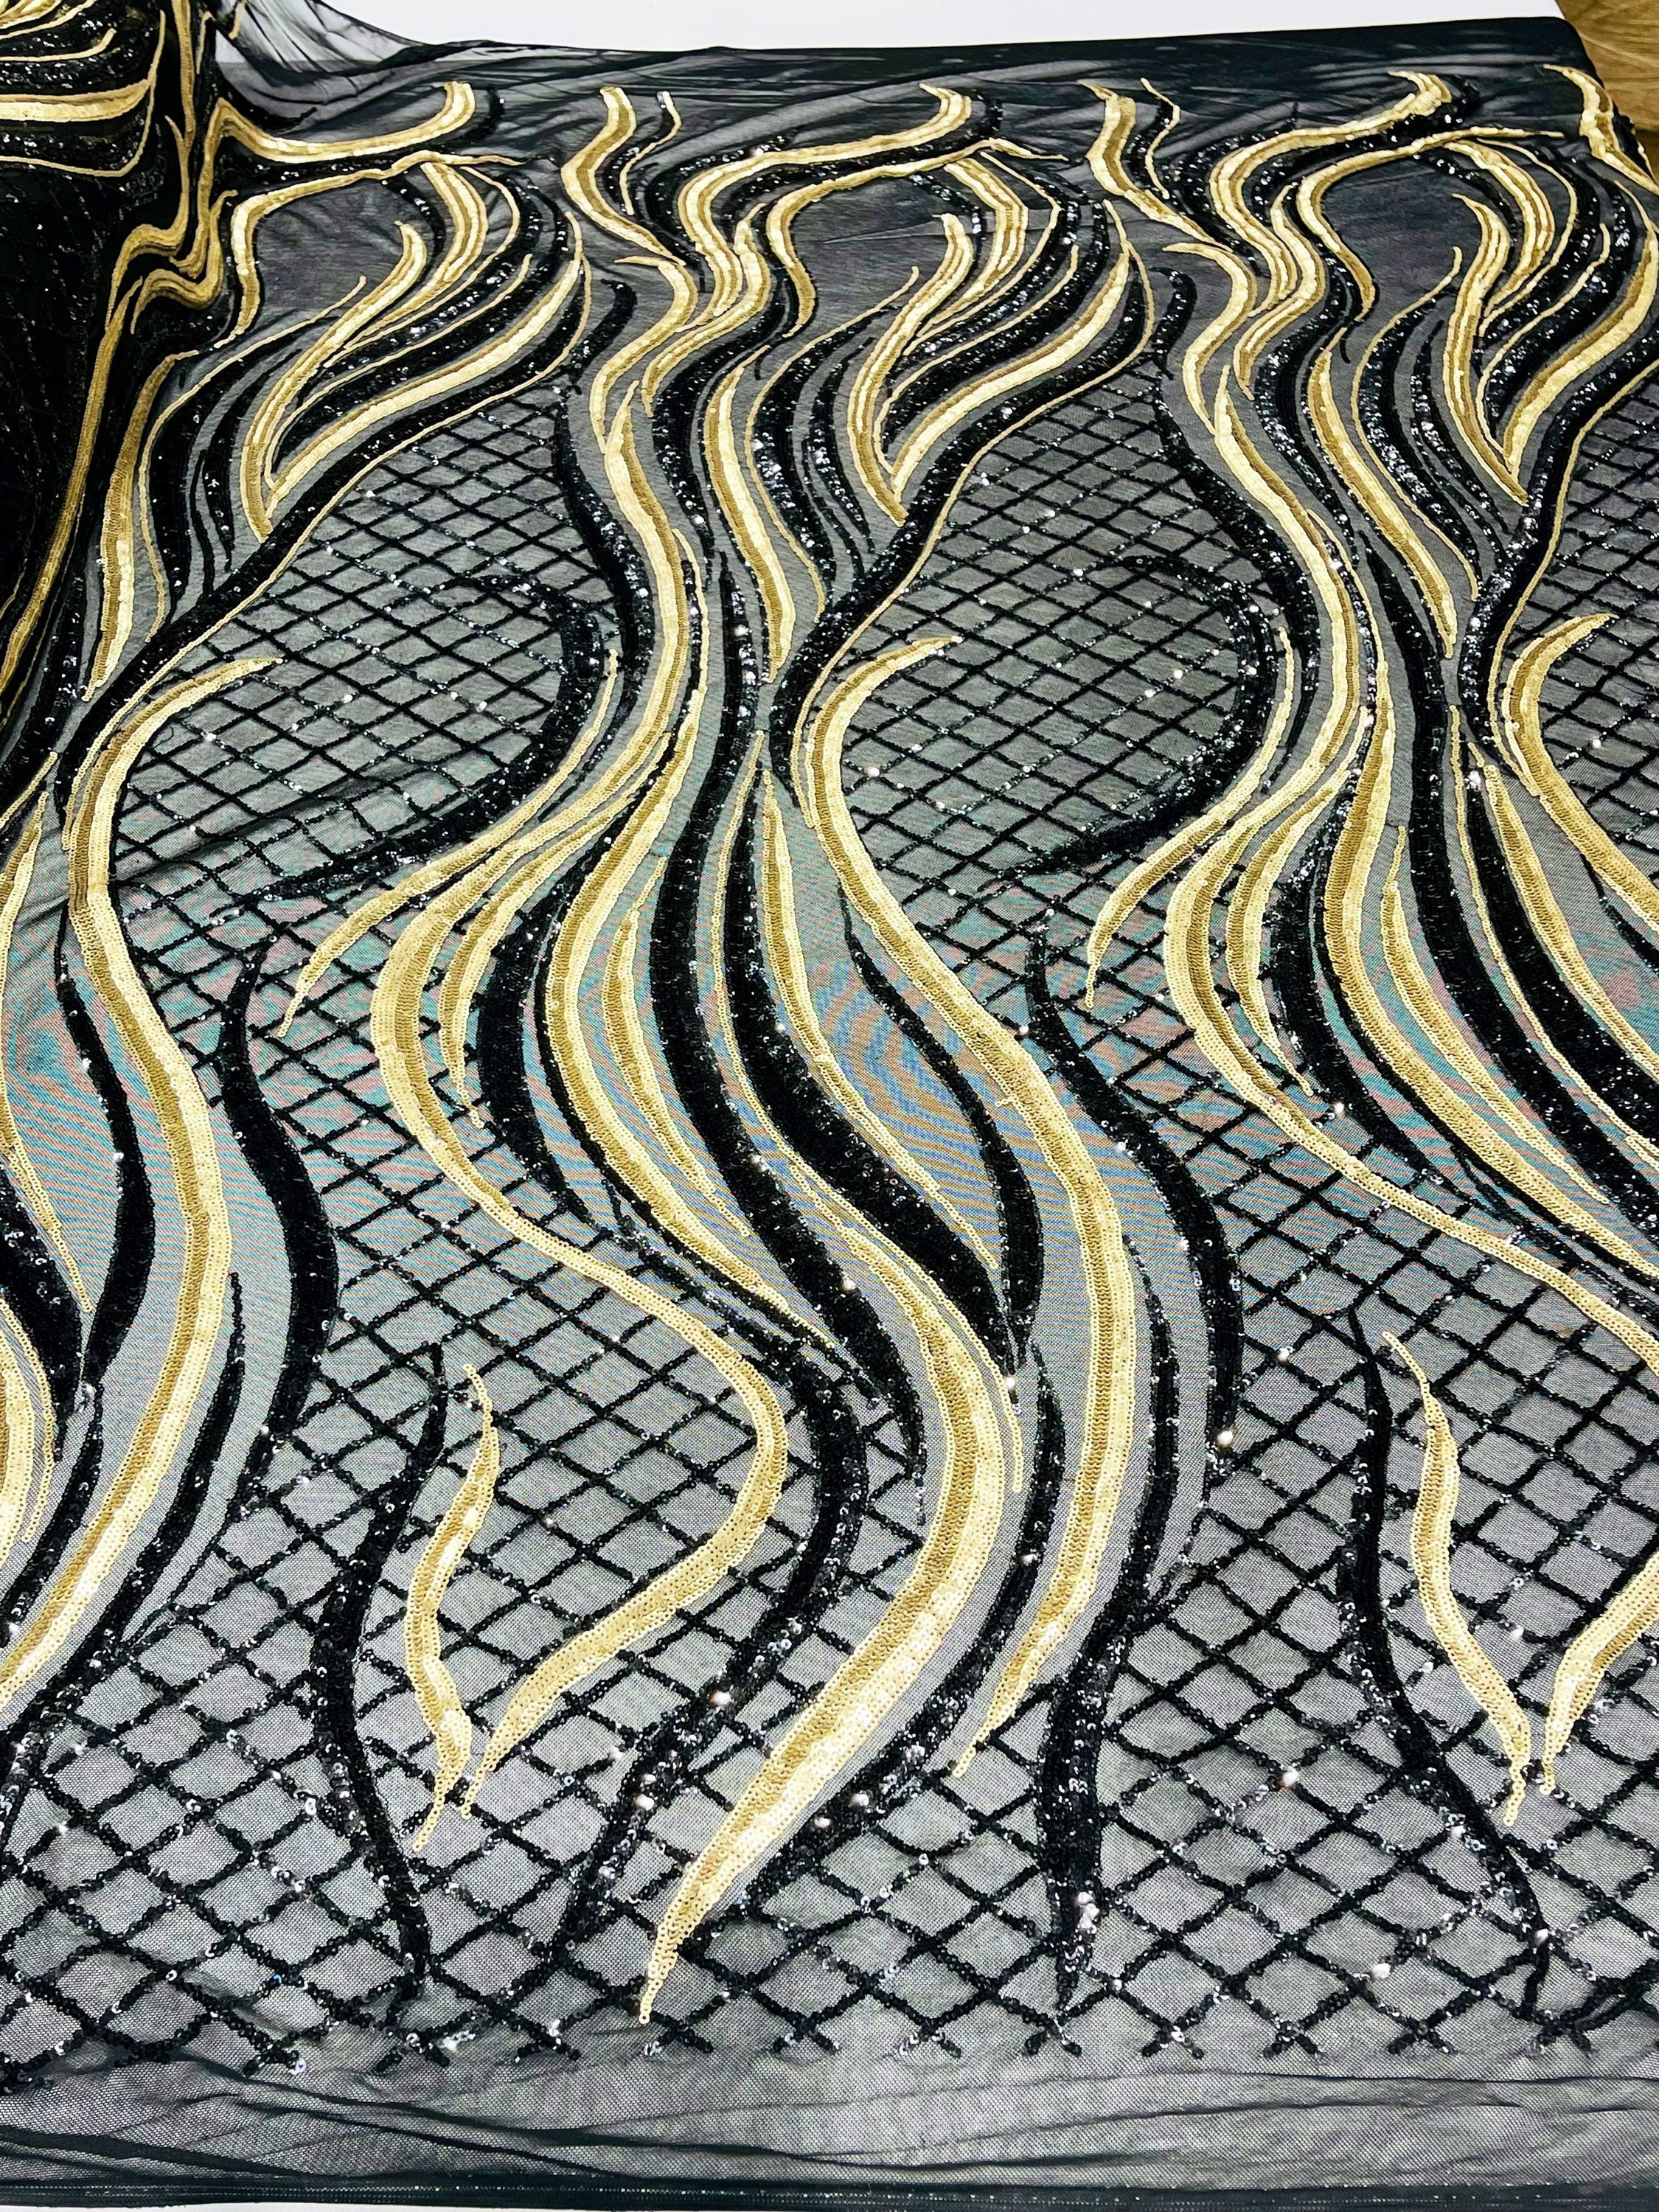 Iridescent Rhinestones Fabric On White Stretch Net Fabric, Spandex